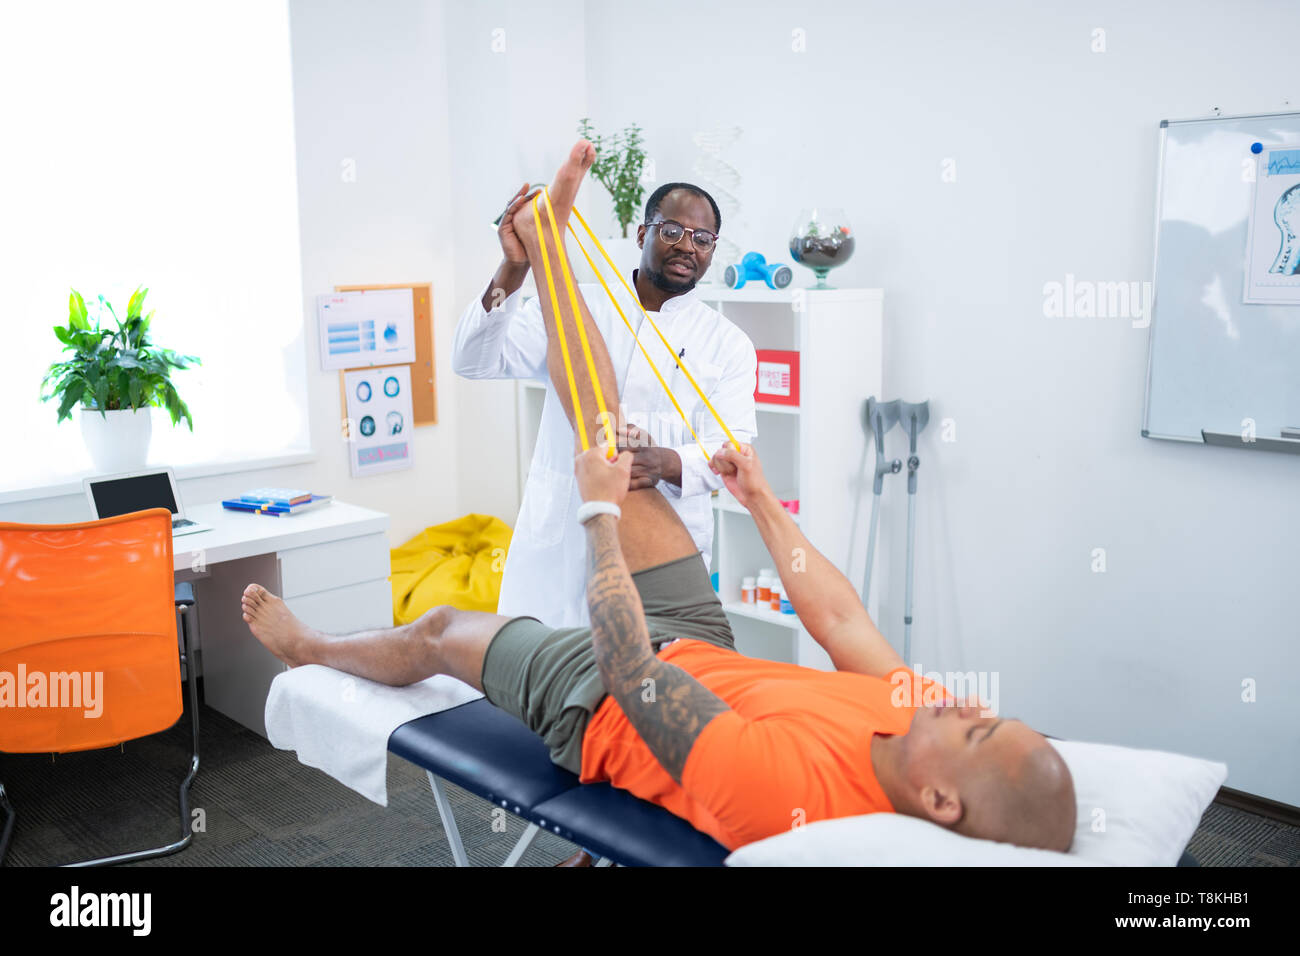 Man holding yellow ribbon while stretching leg visiting therapist Stock Photo